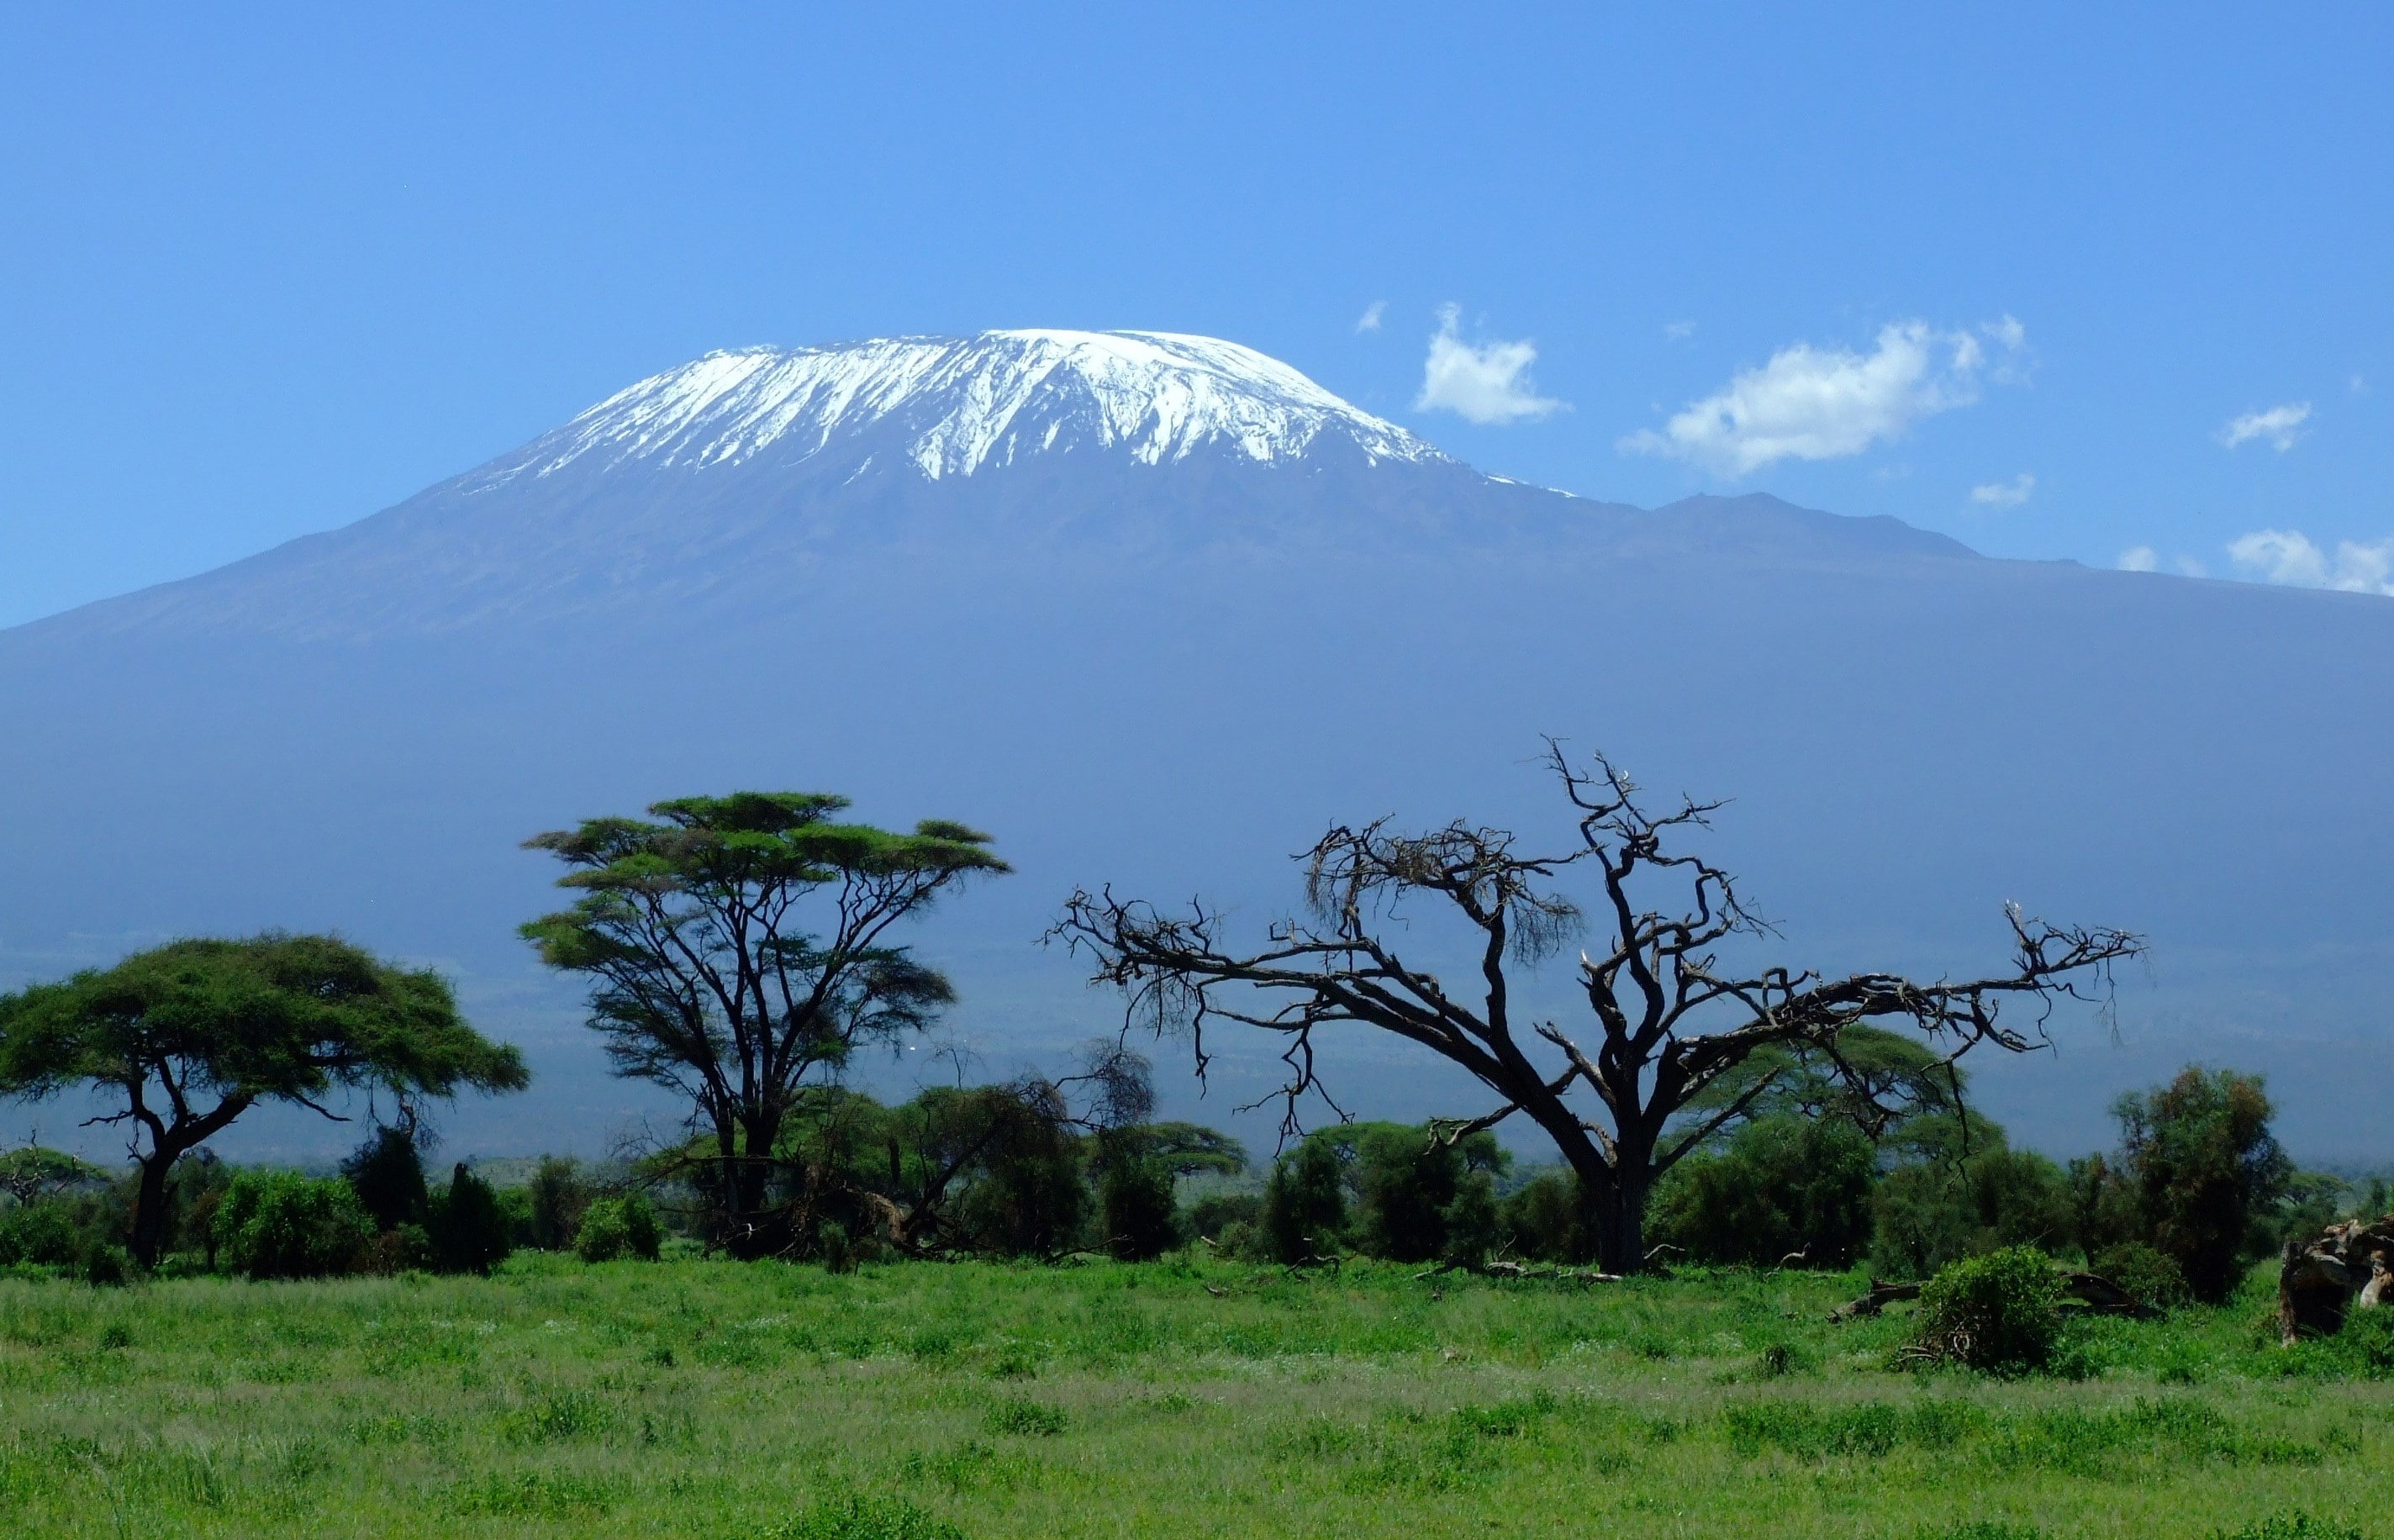 mount kilimanjaro, mountain, scenics - nature, tree, beauty in nature